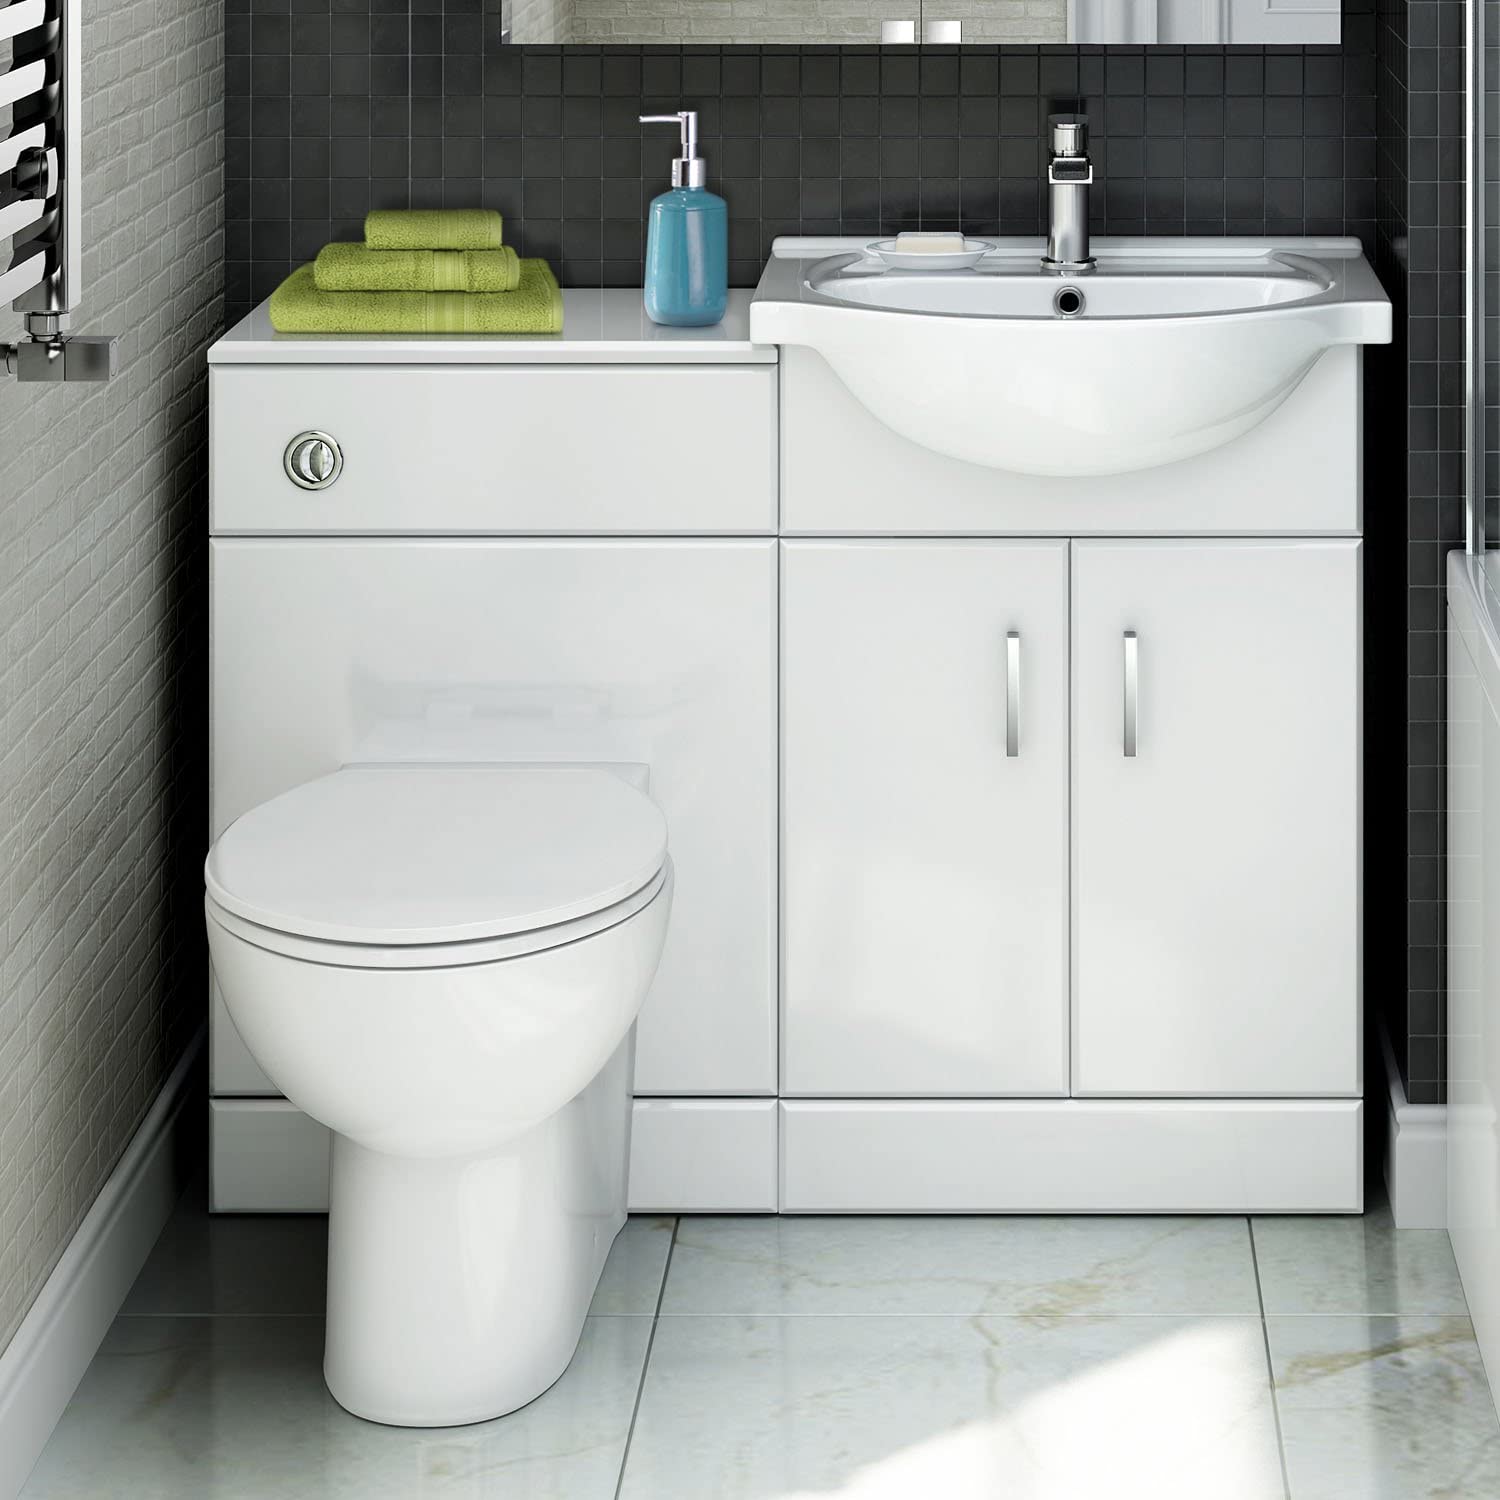 Quartz Modern Bathroom Combination Set - (Toilet, Seat, Vanity Unit and Basin) - Gloss White